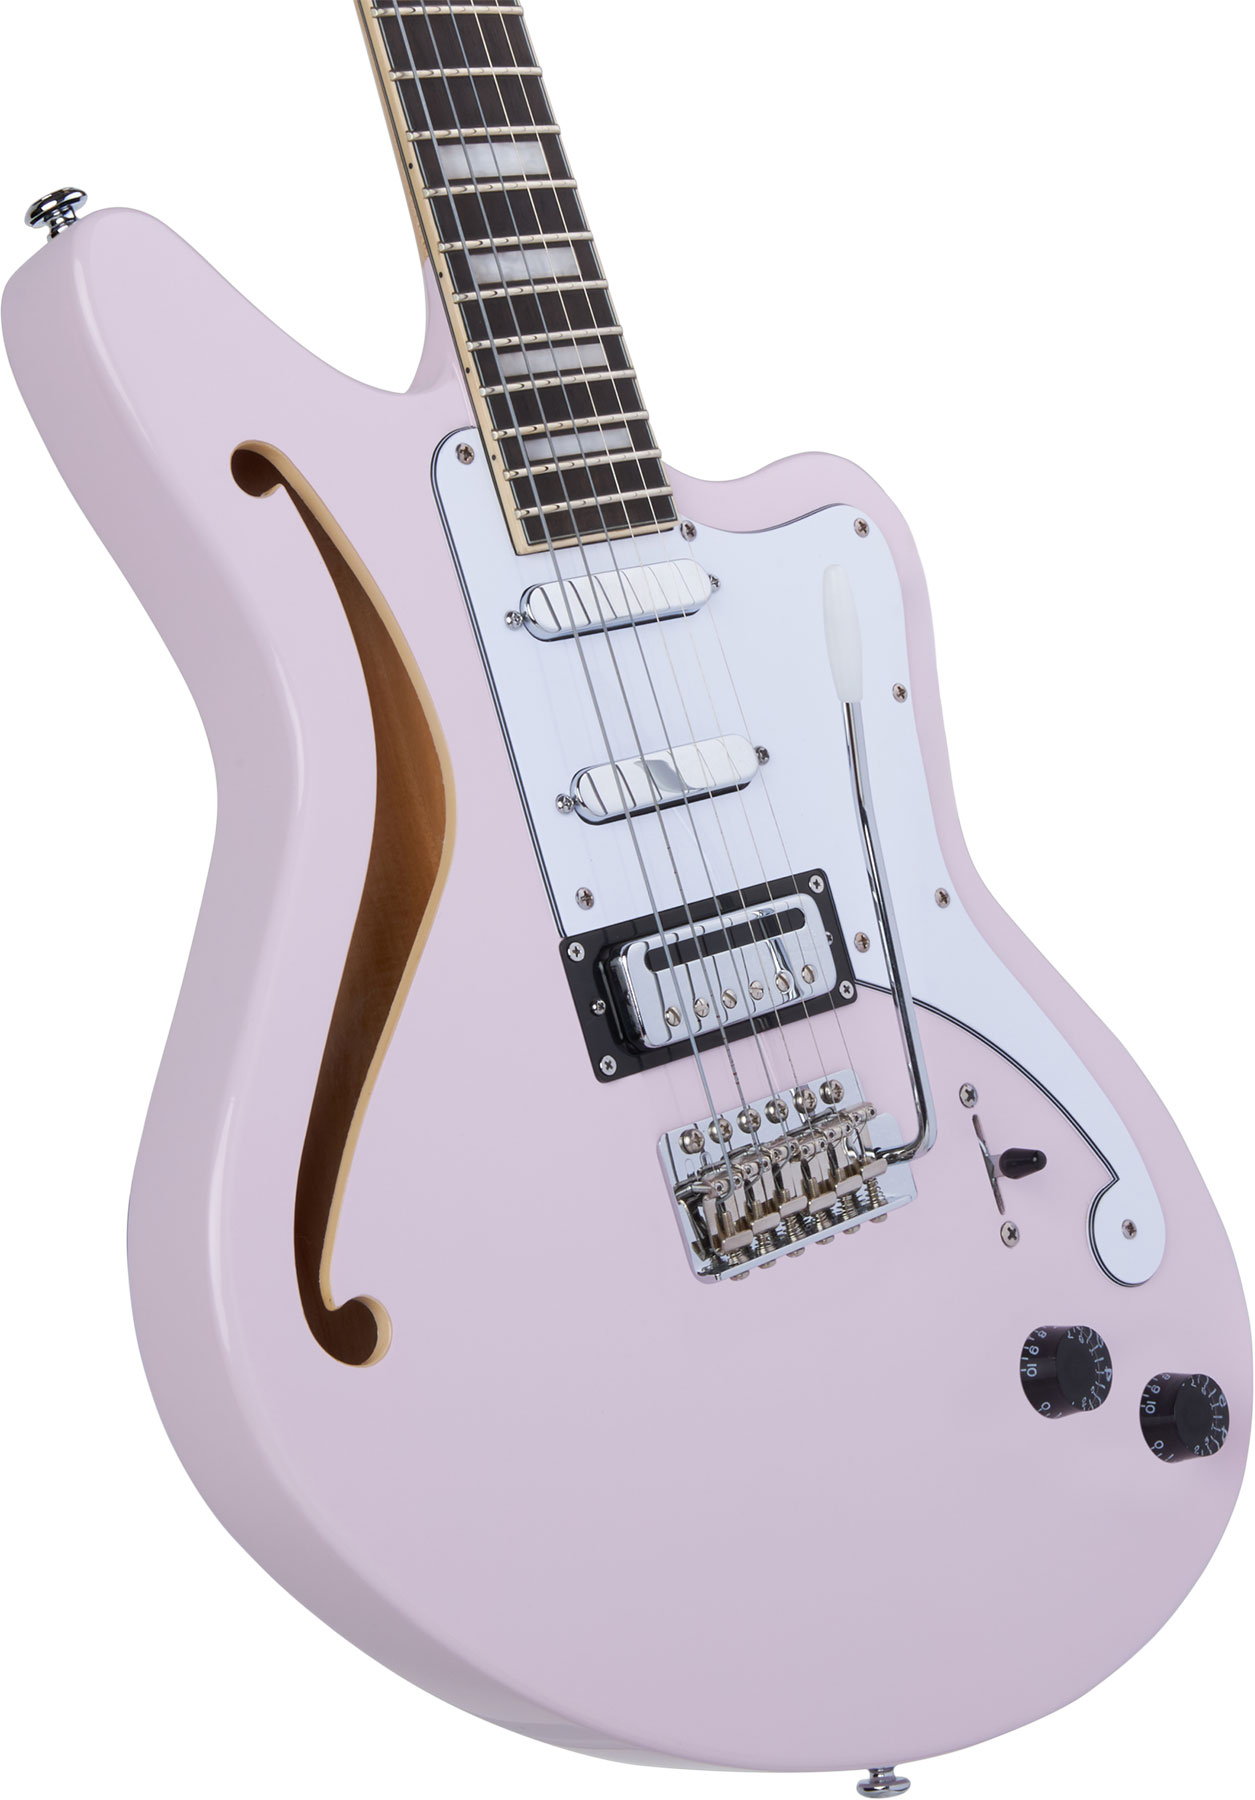 D'angelico Bedford Sh Premier Hss Trem Ova - Shell Pink - Semi-Hollow E-Gitarre - Variation 3